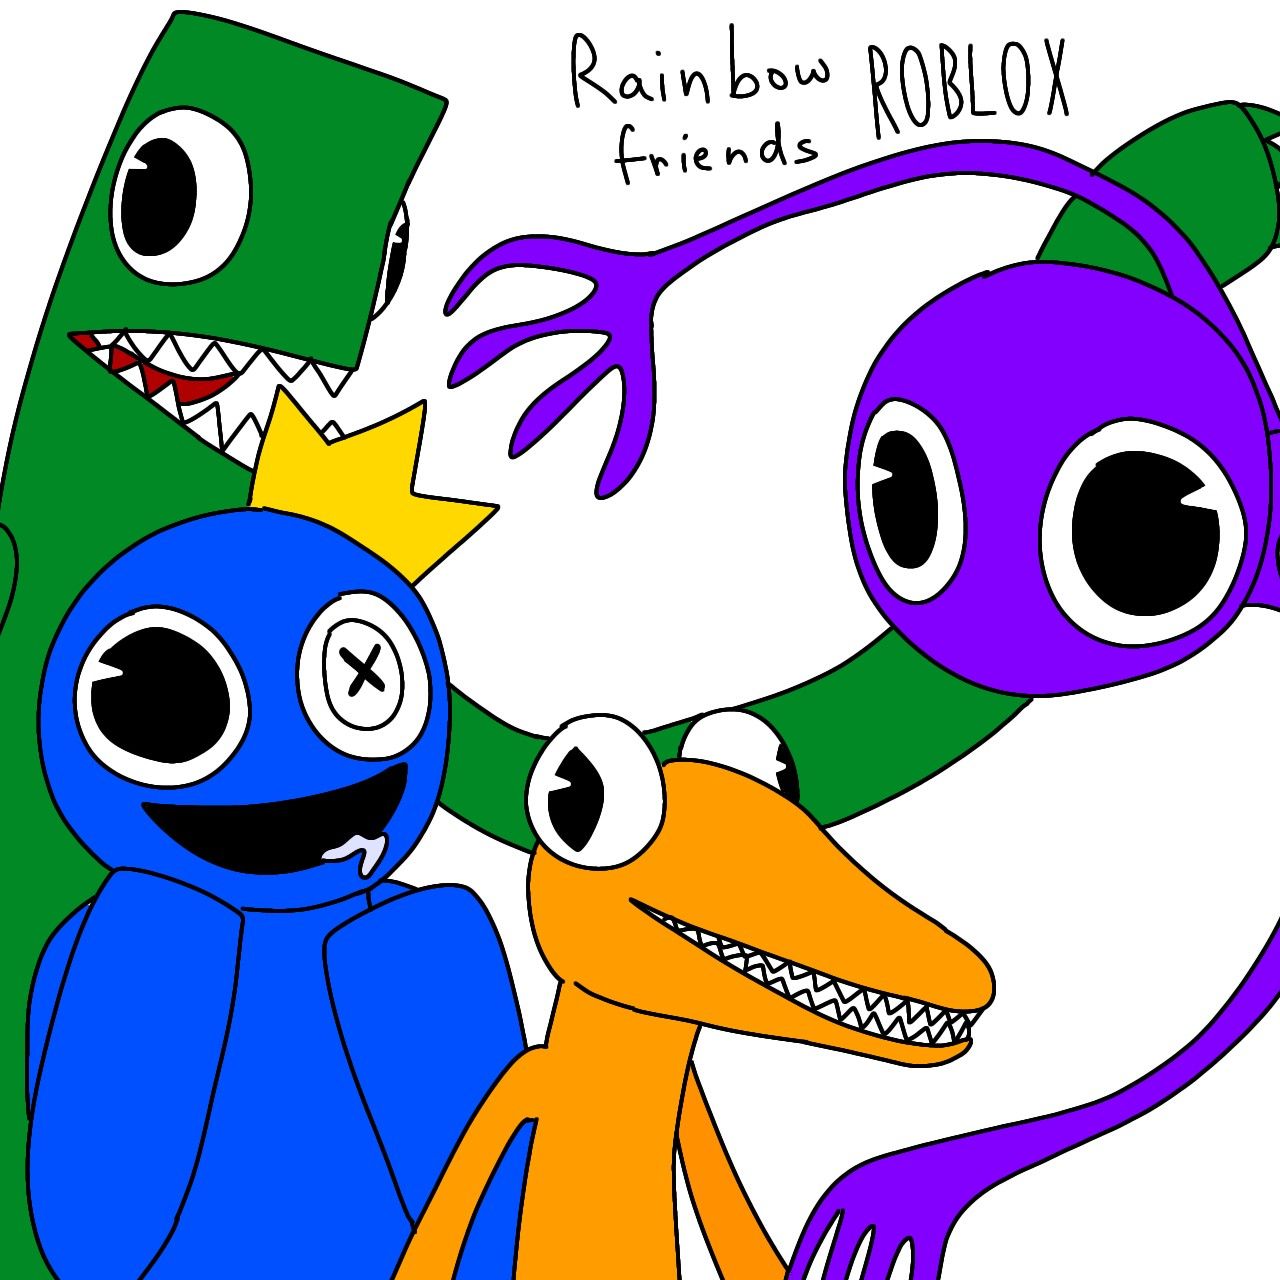 Rainbow friends roblox. Friends wallpaper, Rainbow, Drawings of friends